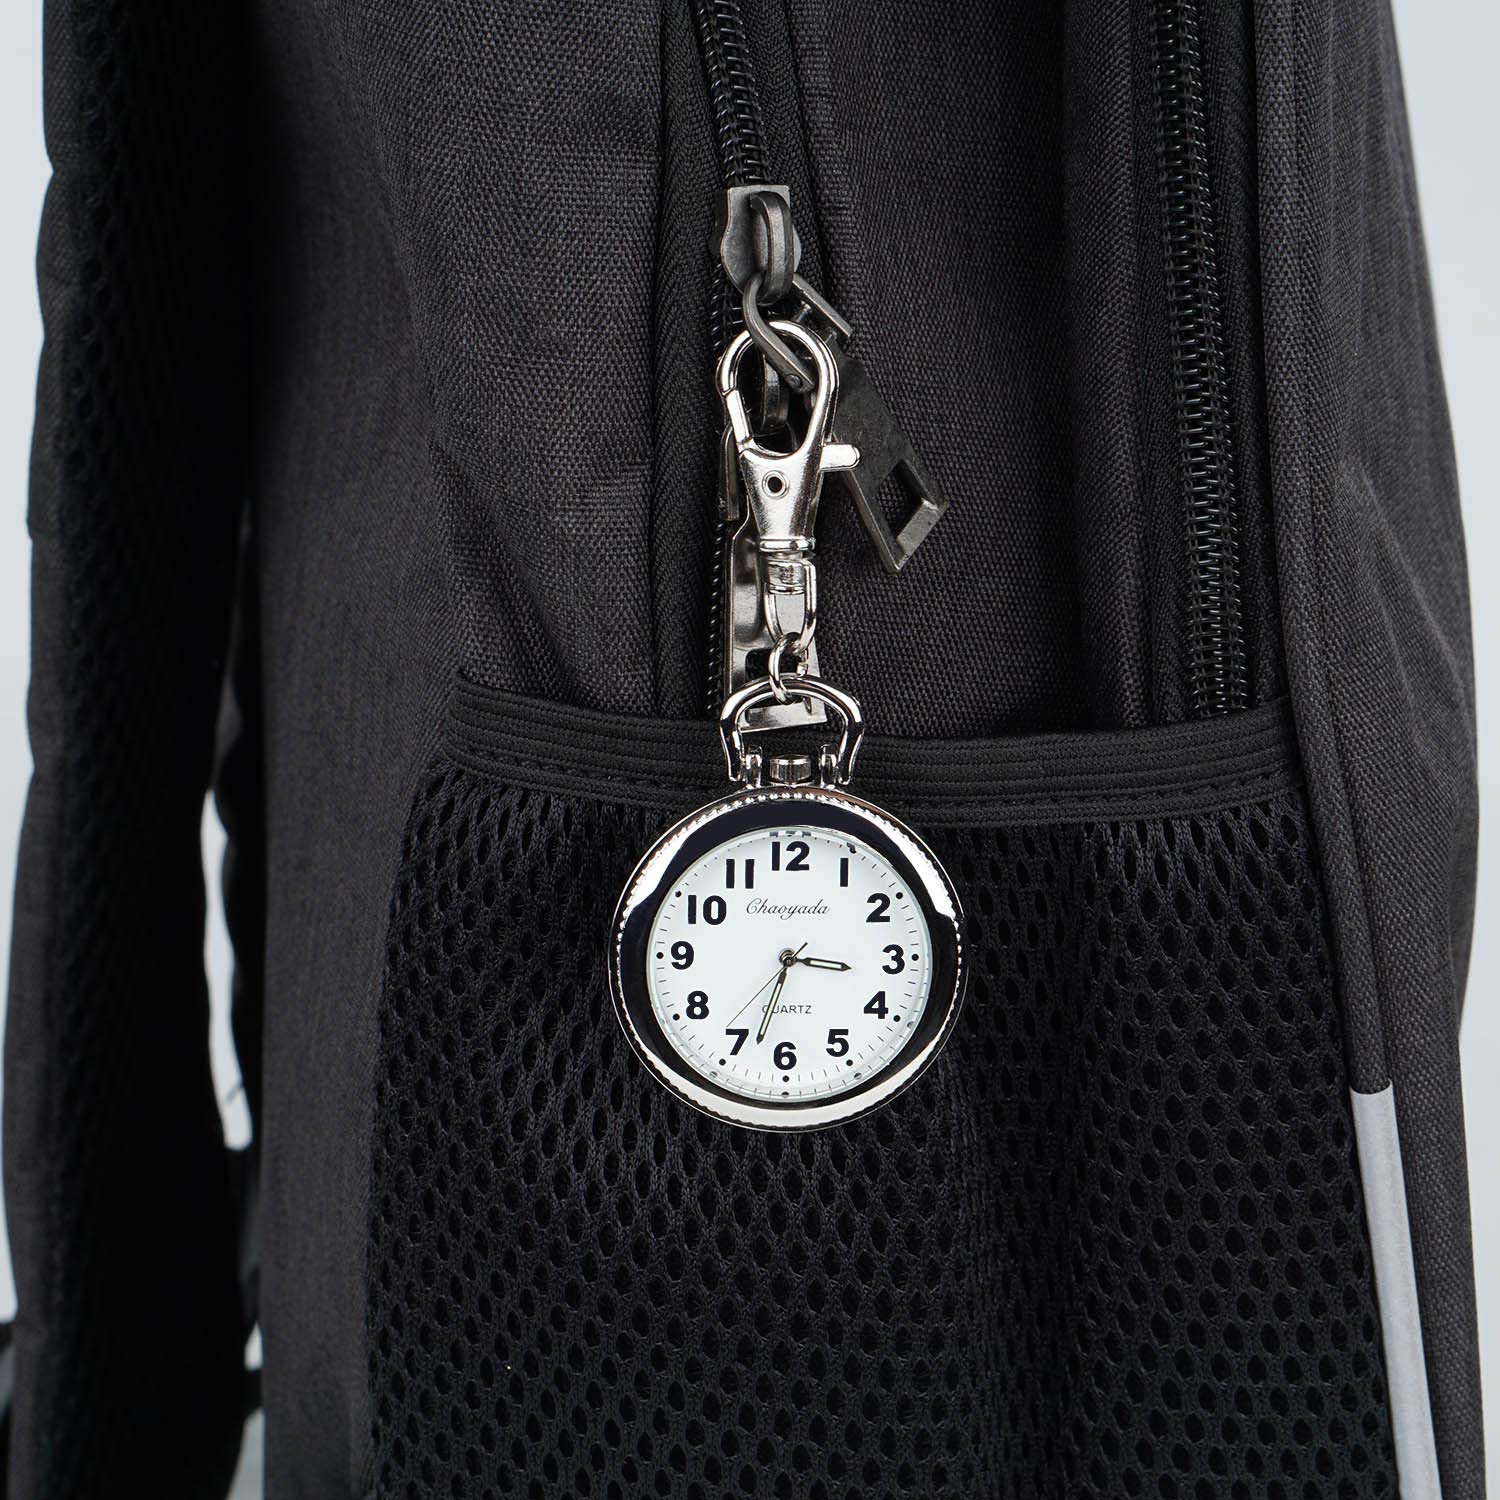 FUNGORGT Minimalist Ultra Thin Open Face Quartz Pocket Watch with Key Buckle Unisex Portable Unisex Pocket Watch